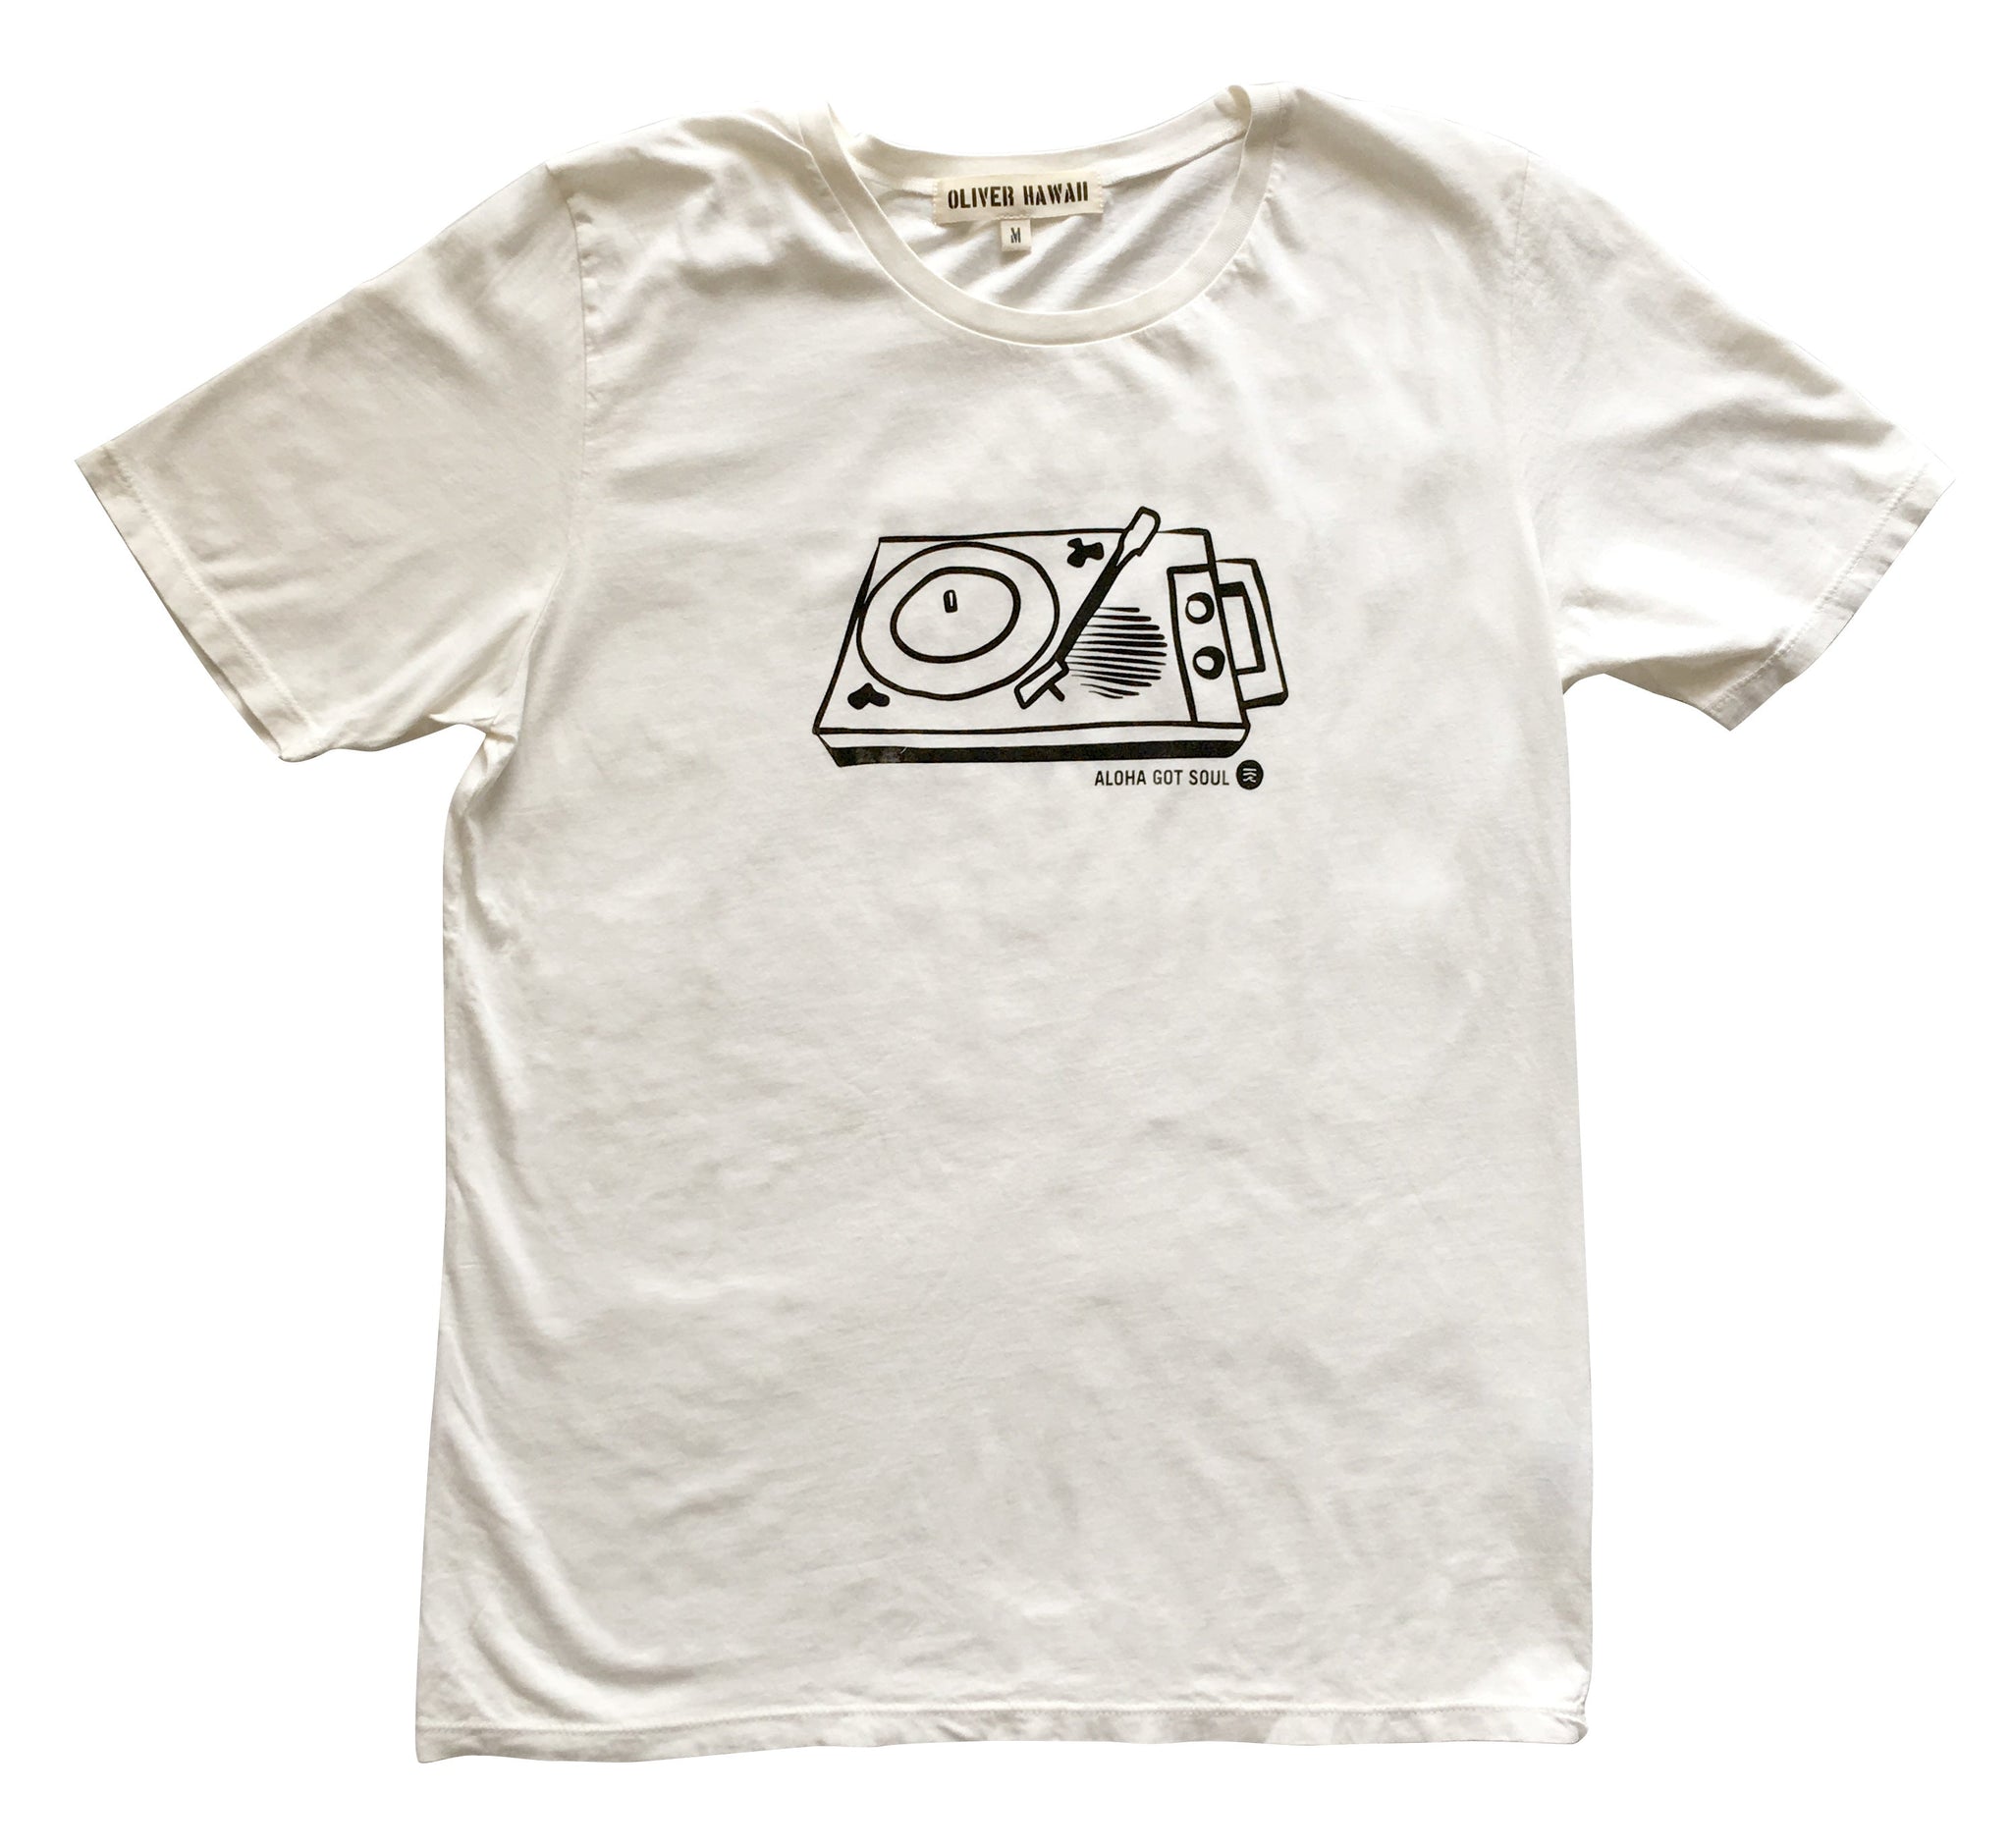 Oliver Hawaii x Aloha Got Soul - T-shirt